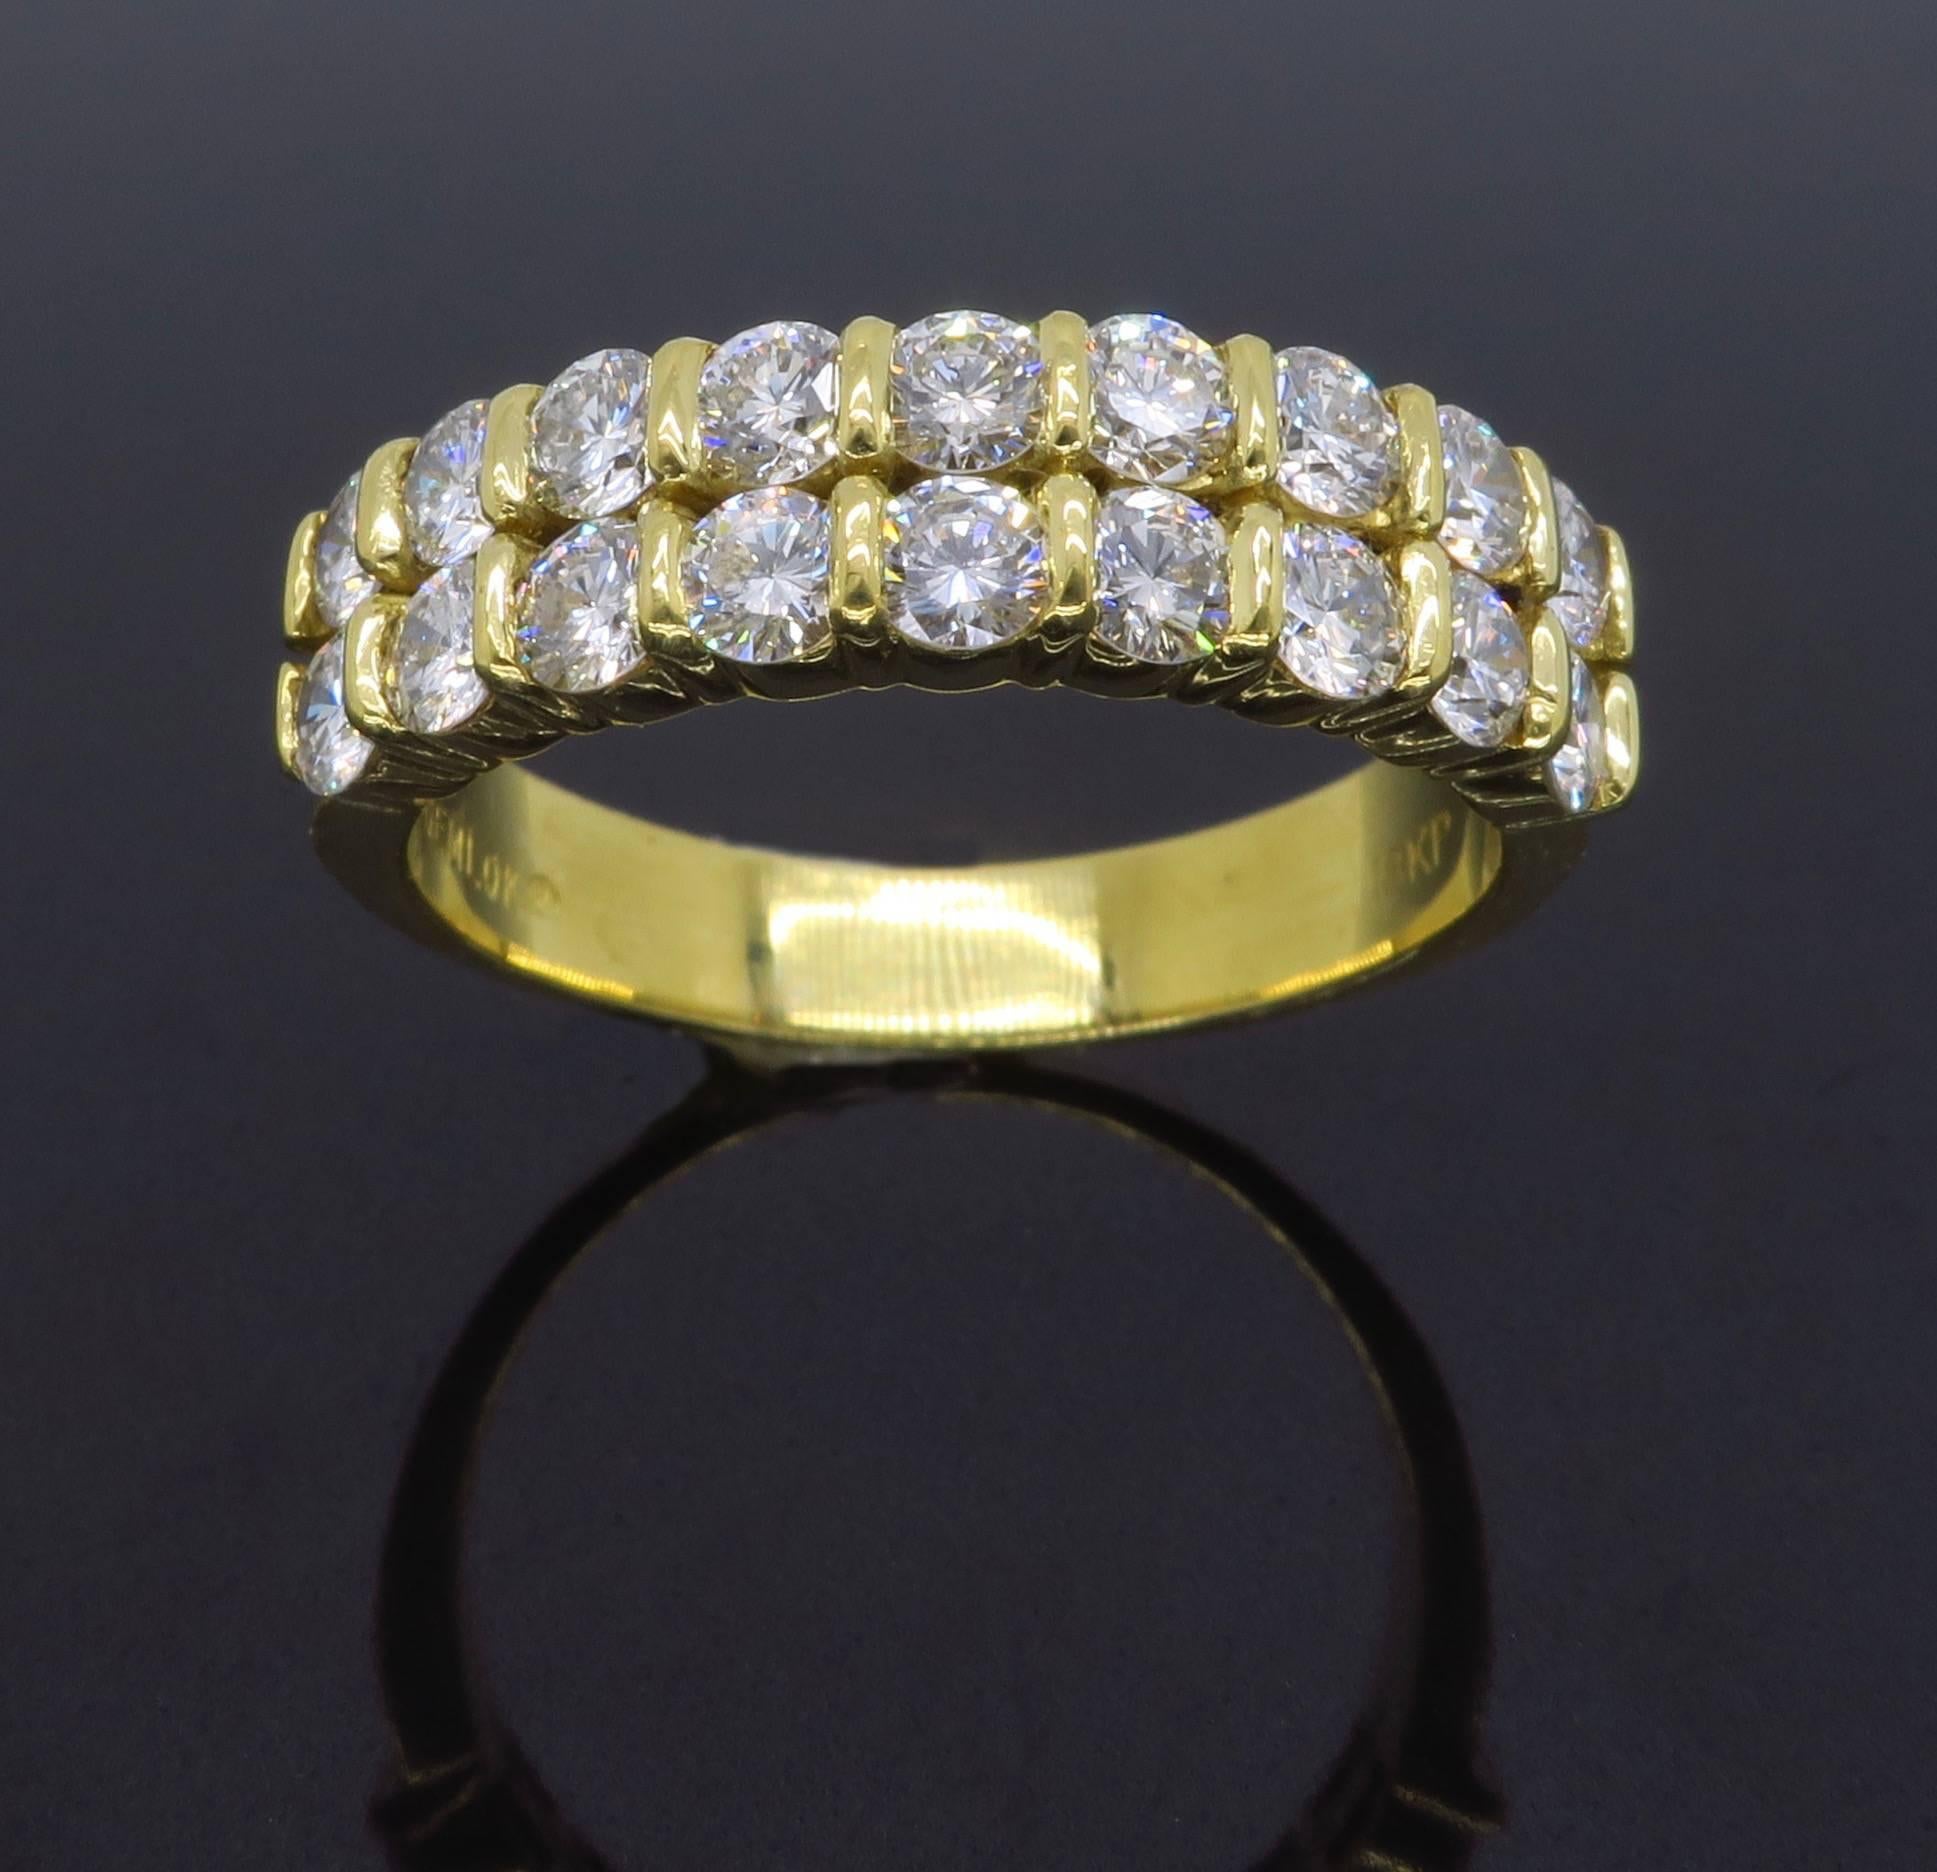  18k Yellow Gold Diamond Double Band Anniversary Ring  5